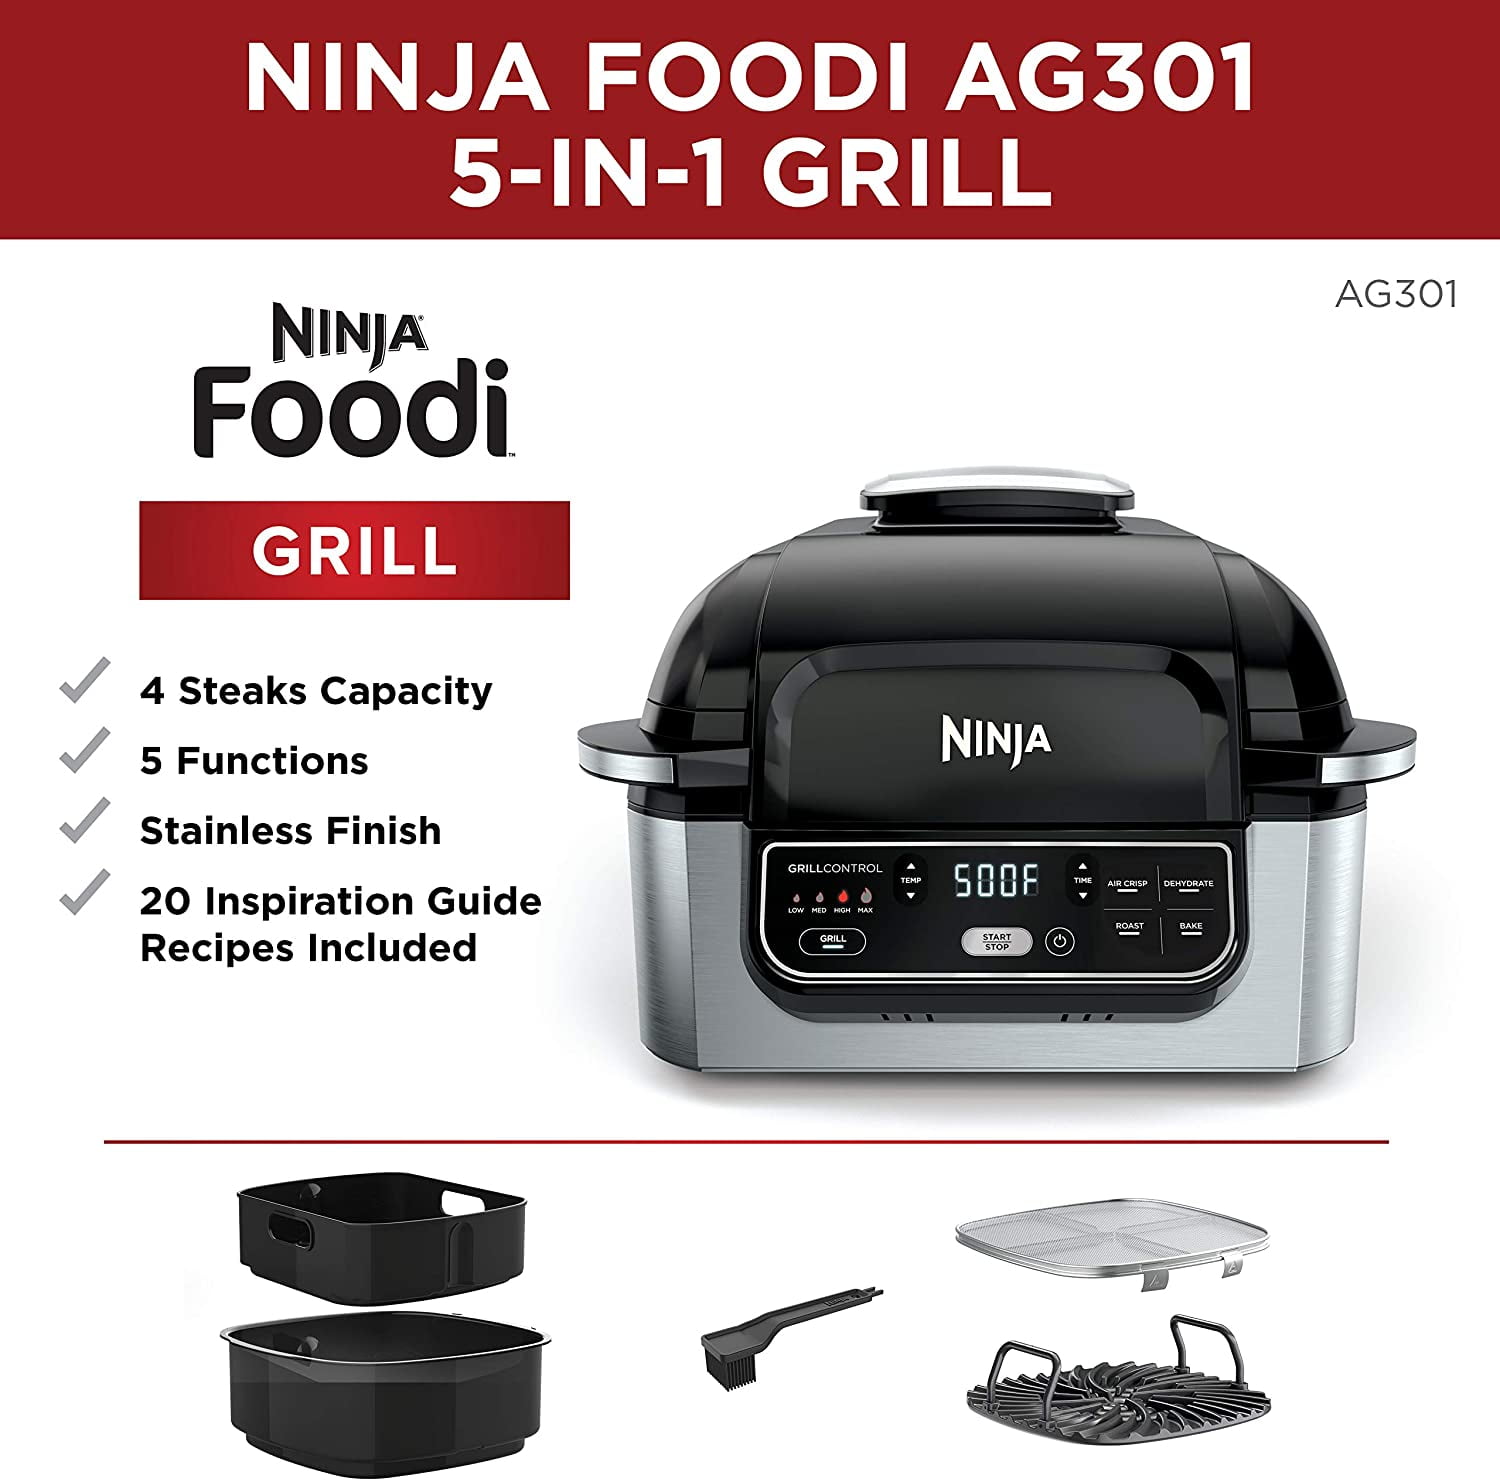 Ninja's regularly $230 Foodi 5-in-1 Air Fry Indoor Grill drops to $170  shipped at